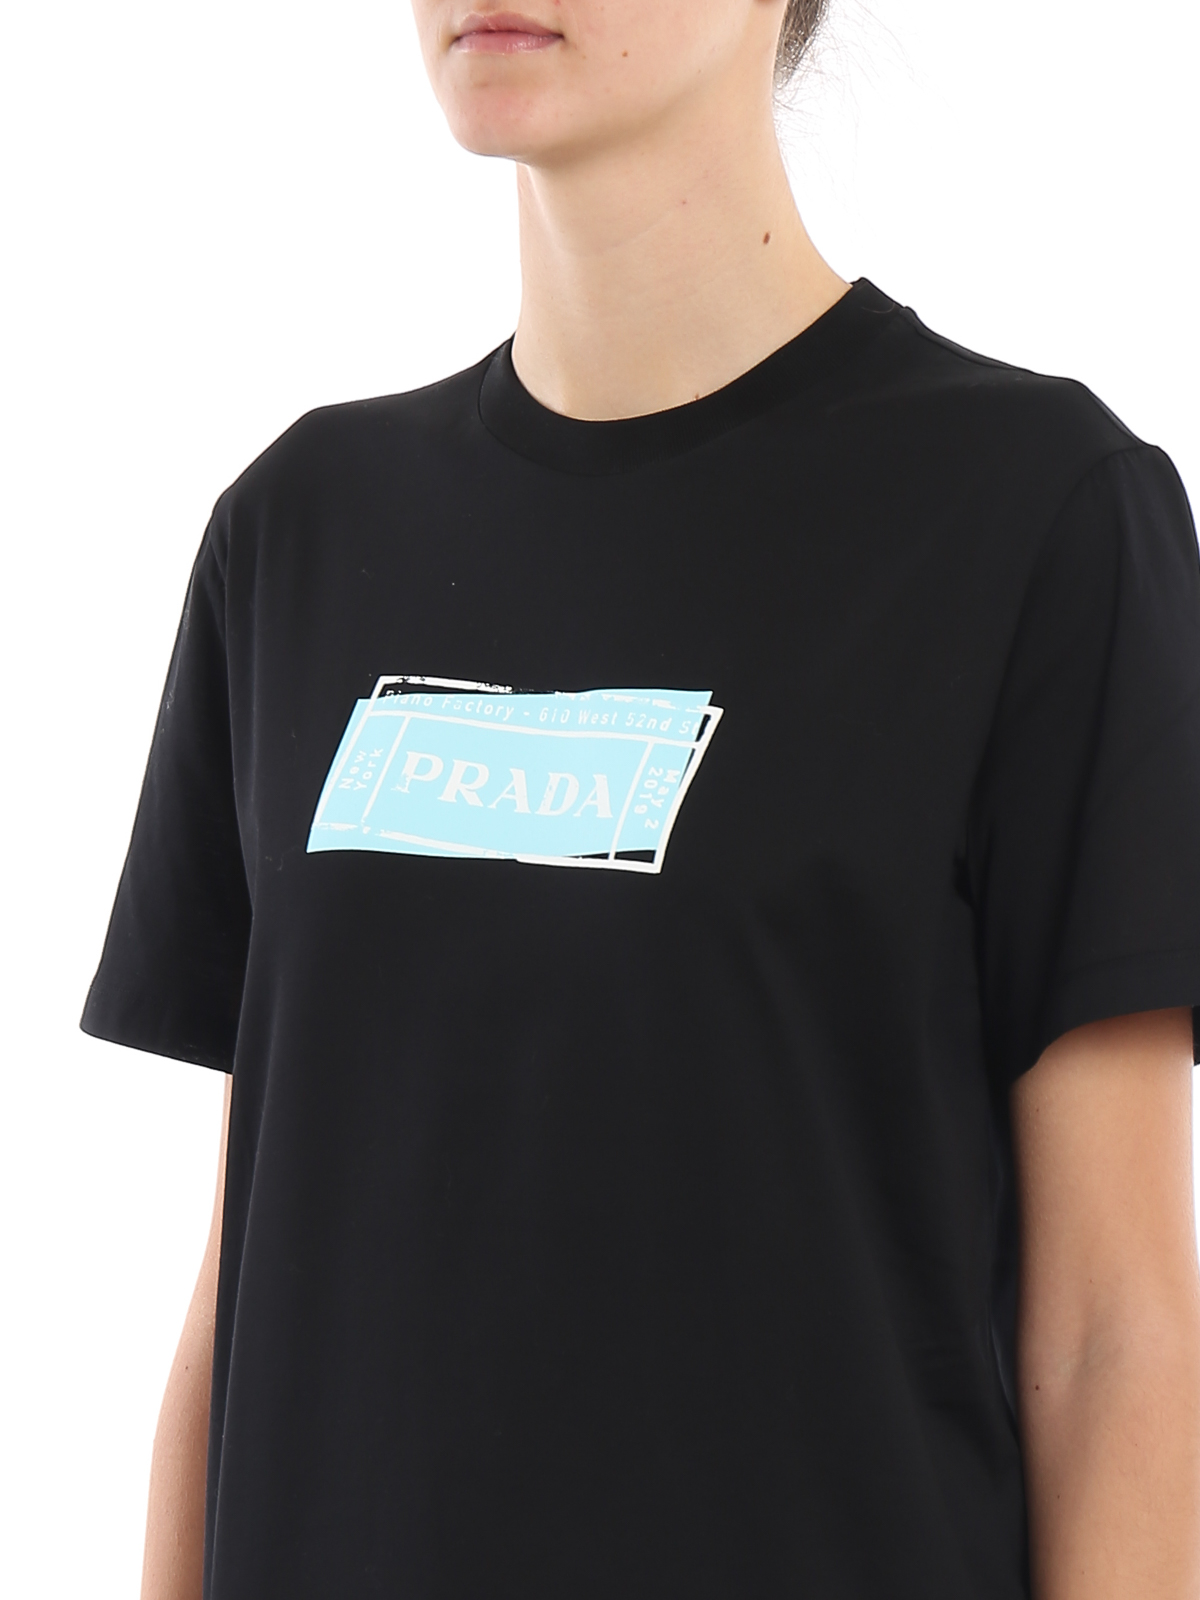 Tシャツ Prada - Tシャツ - 黒 - 358381V0EF0002 | iKRIX shop online